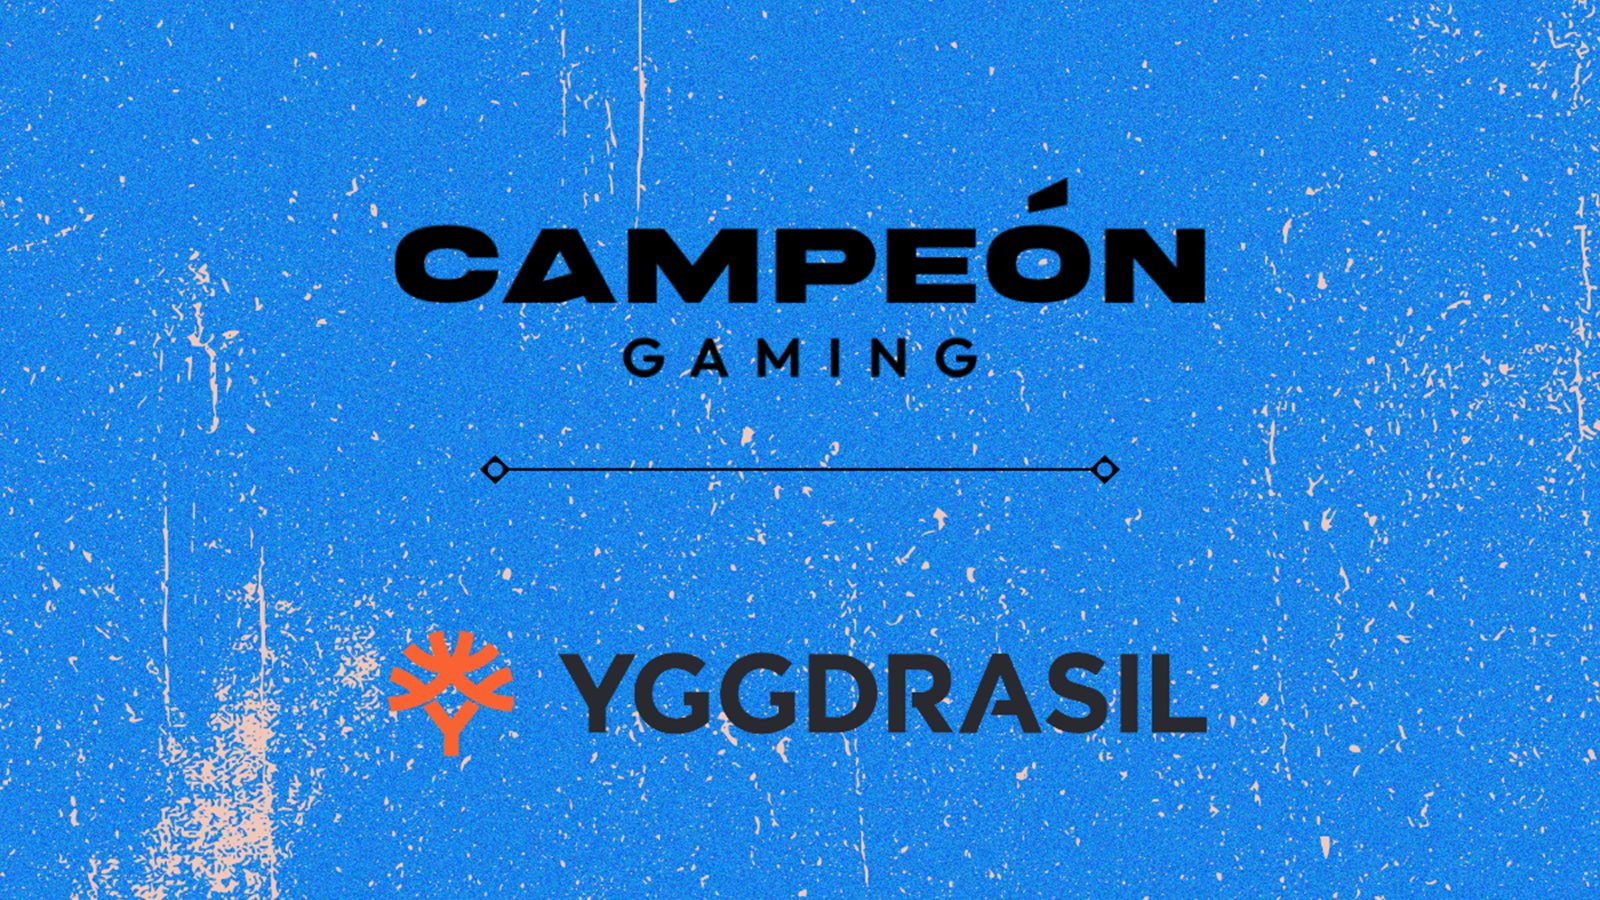 Yggdrasil's Partnership with Campeón Gaming